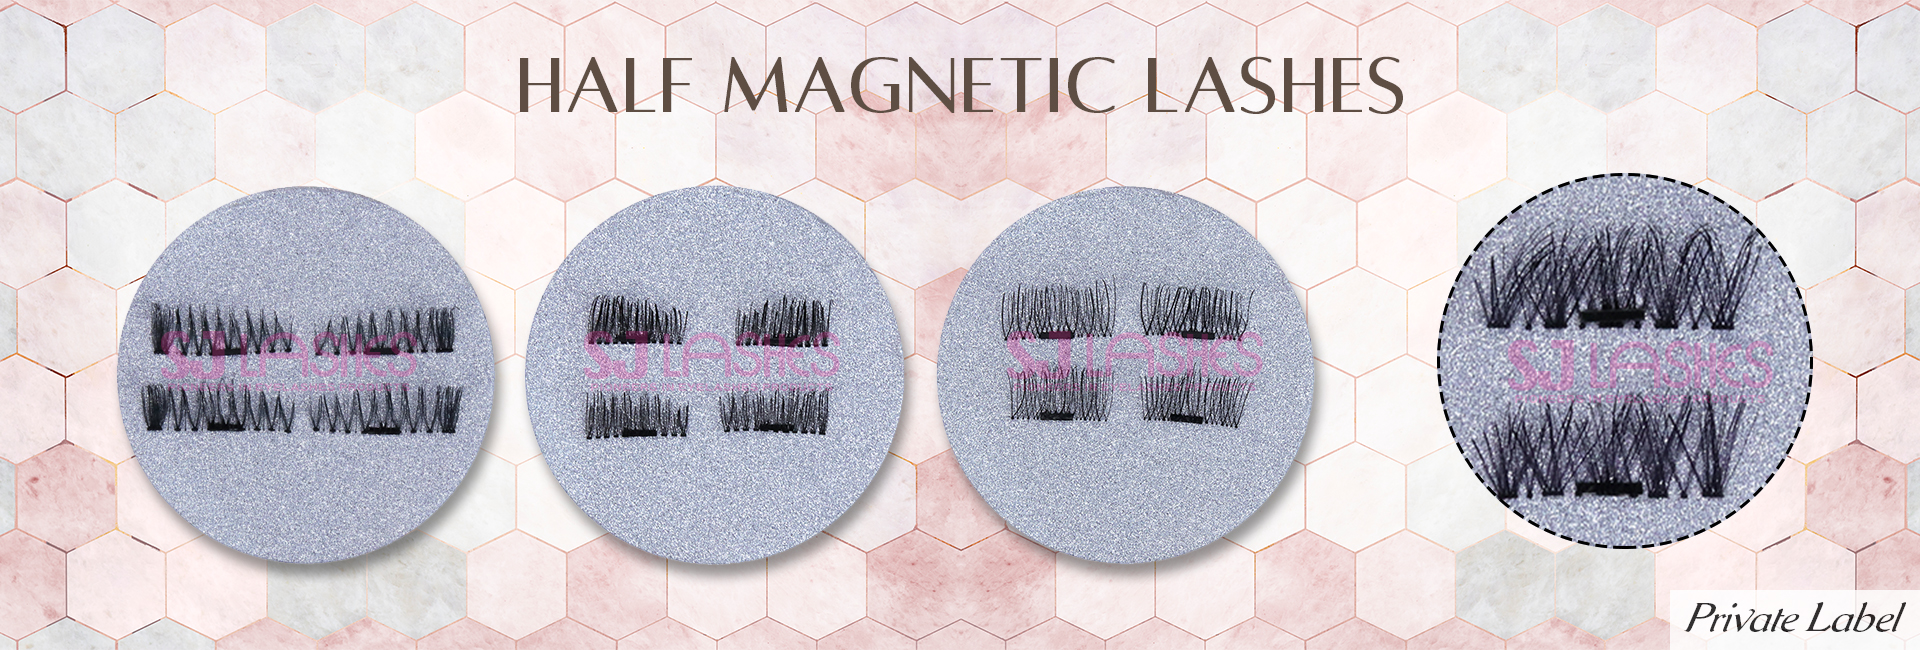 Half Magnetic Lashes